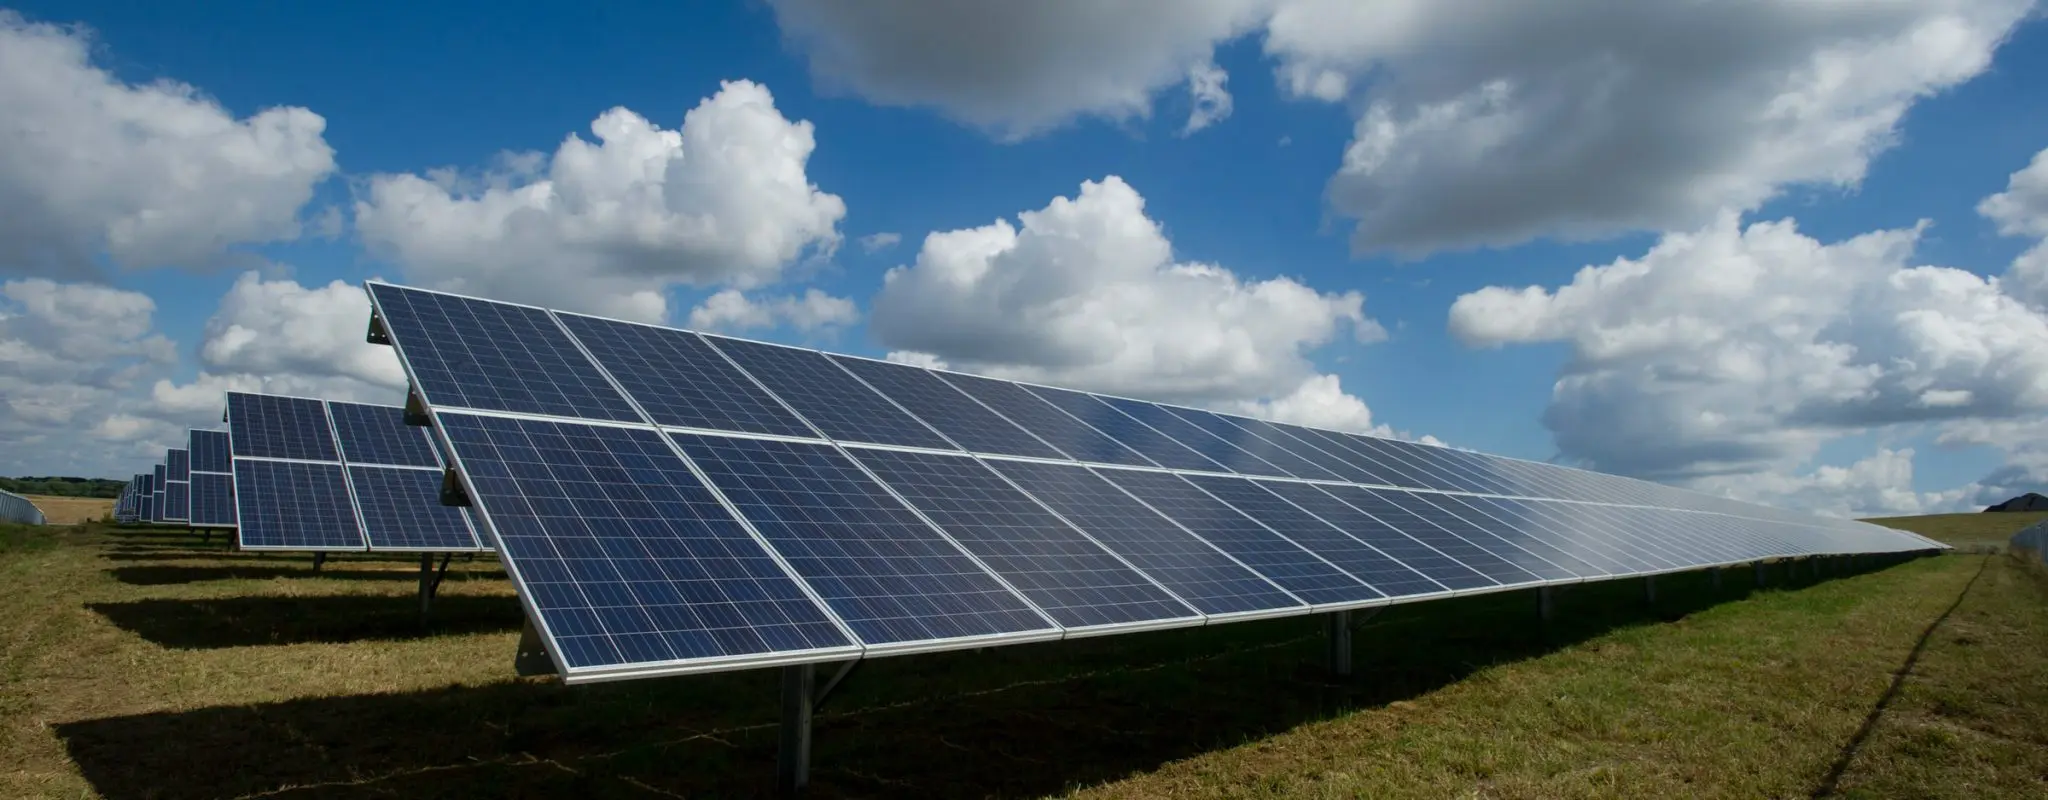 Image of multiple solar panels beneath a shining sun in a grassy field.